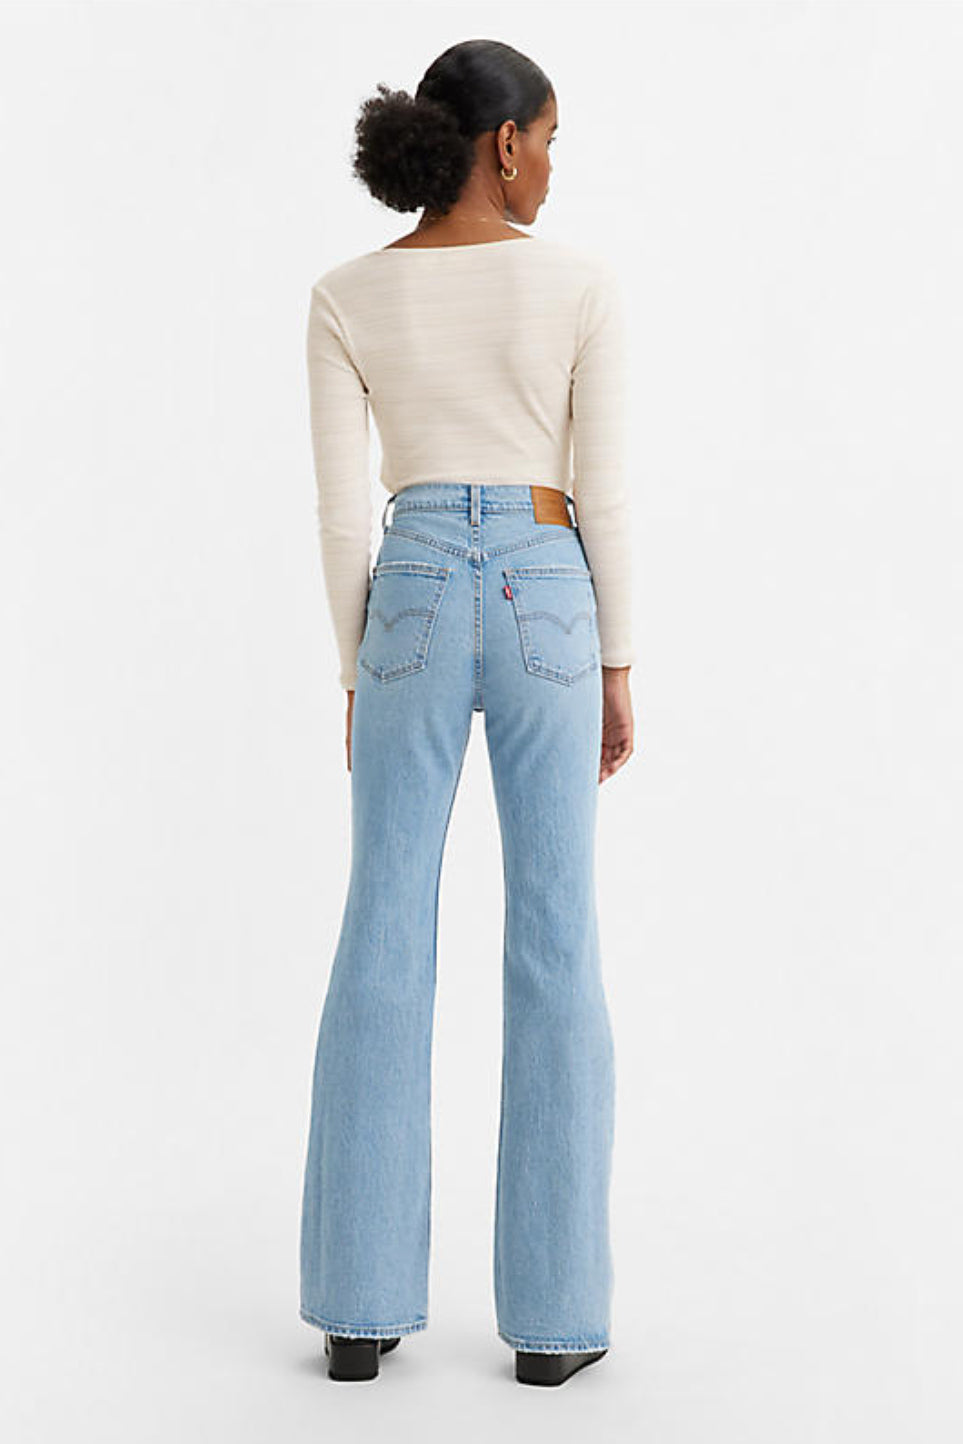 Levi's 70's High Flare Women's Jeans - Maude